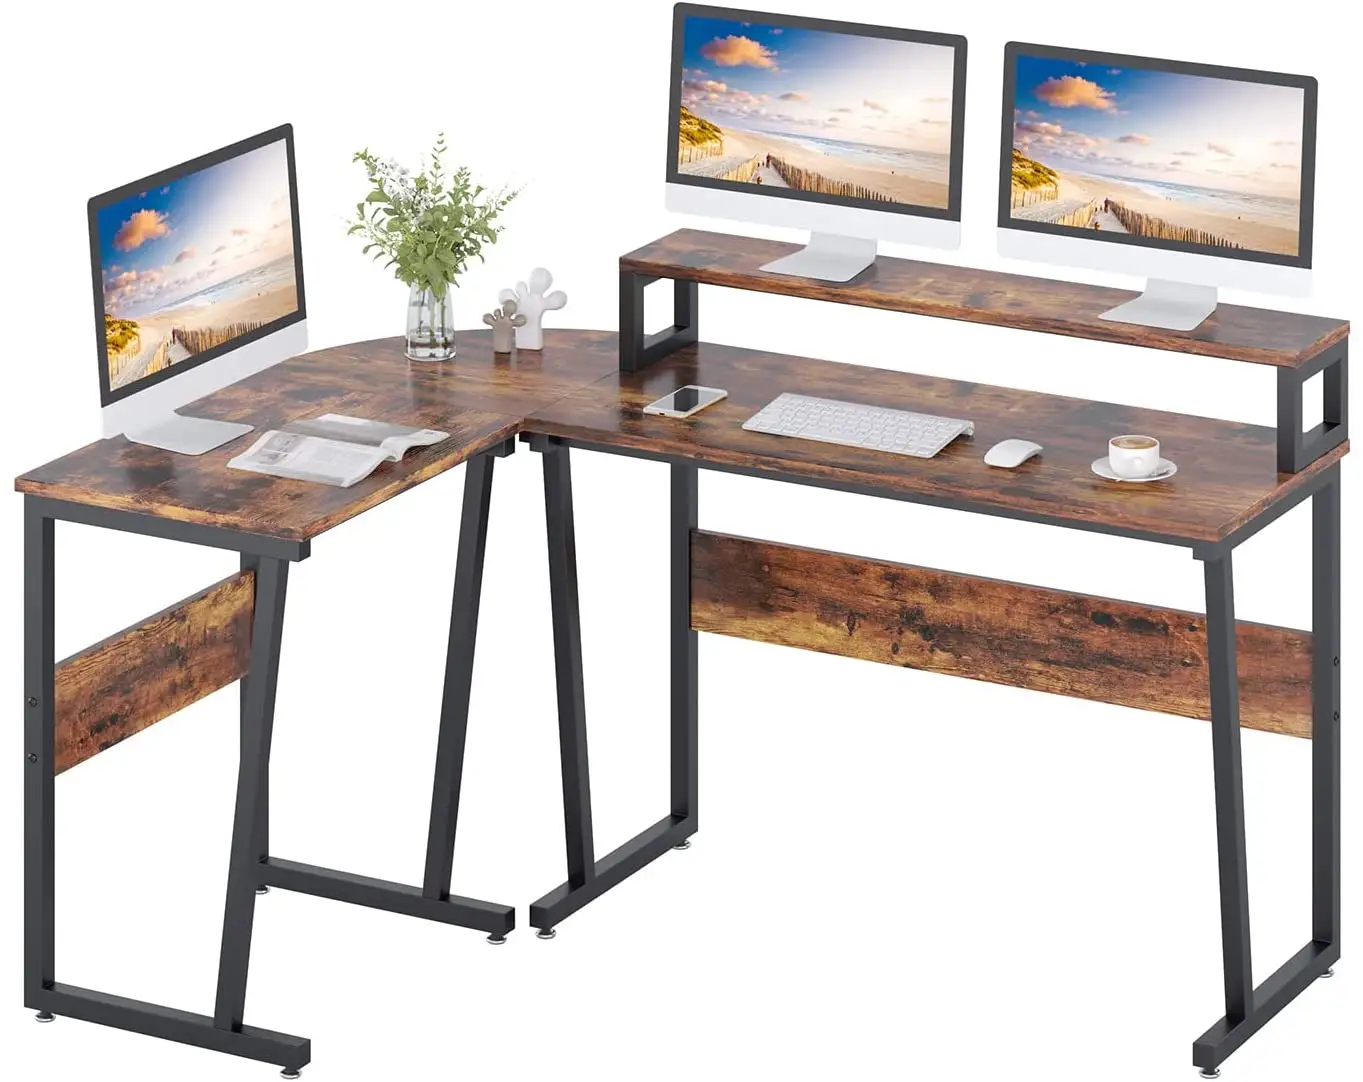 Mdf Wood modern Tables Standing Office Desk Save Space Storage Shelf Adjustable Home game office computer desk